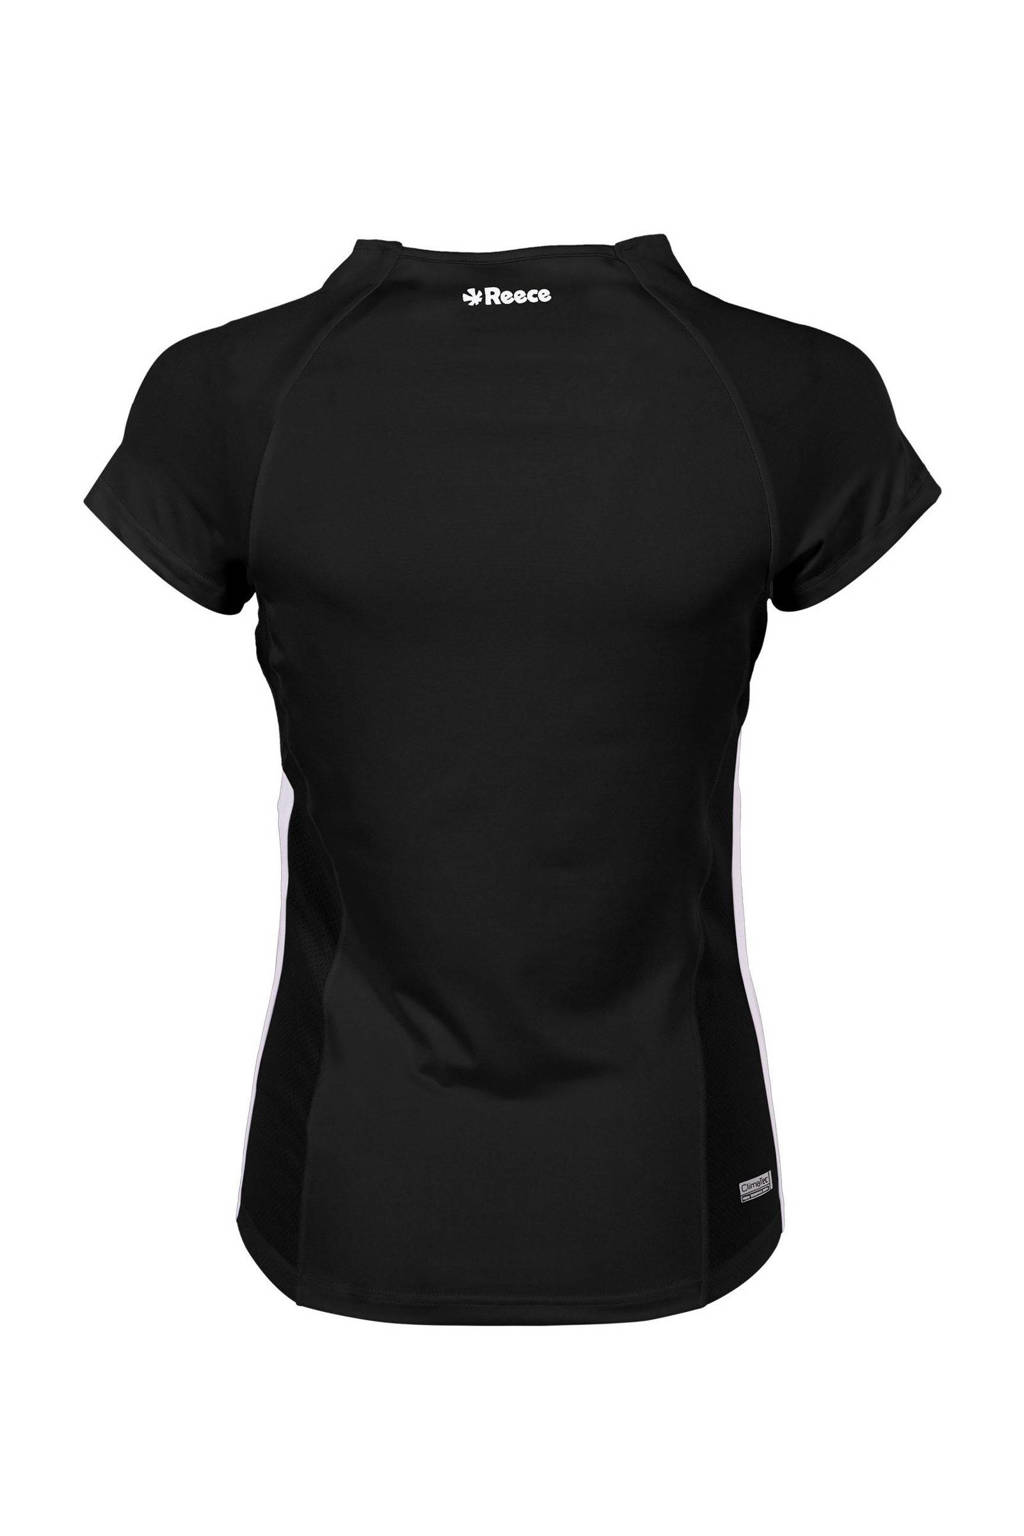 Transistor verkouden worden Gestreept Reece Australia sport T-shirt Rise zwart | kleertjes.com